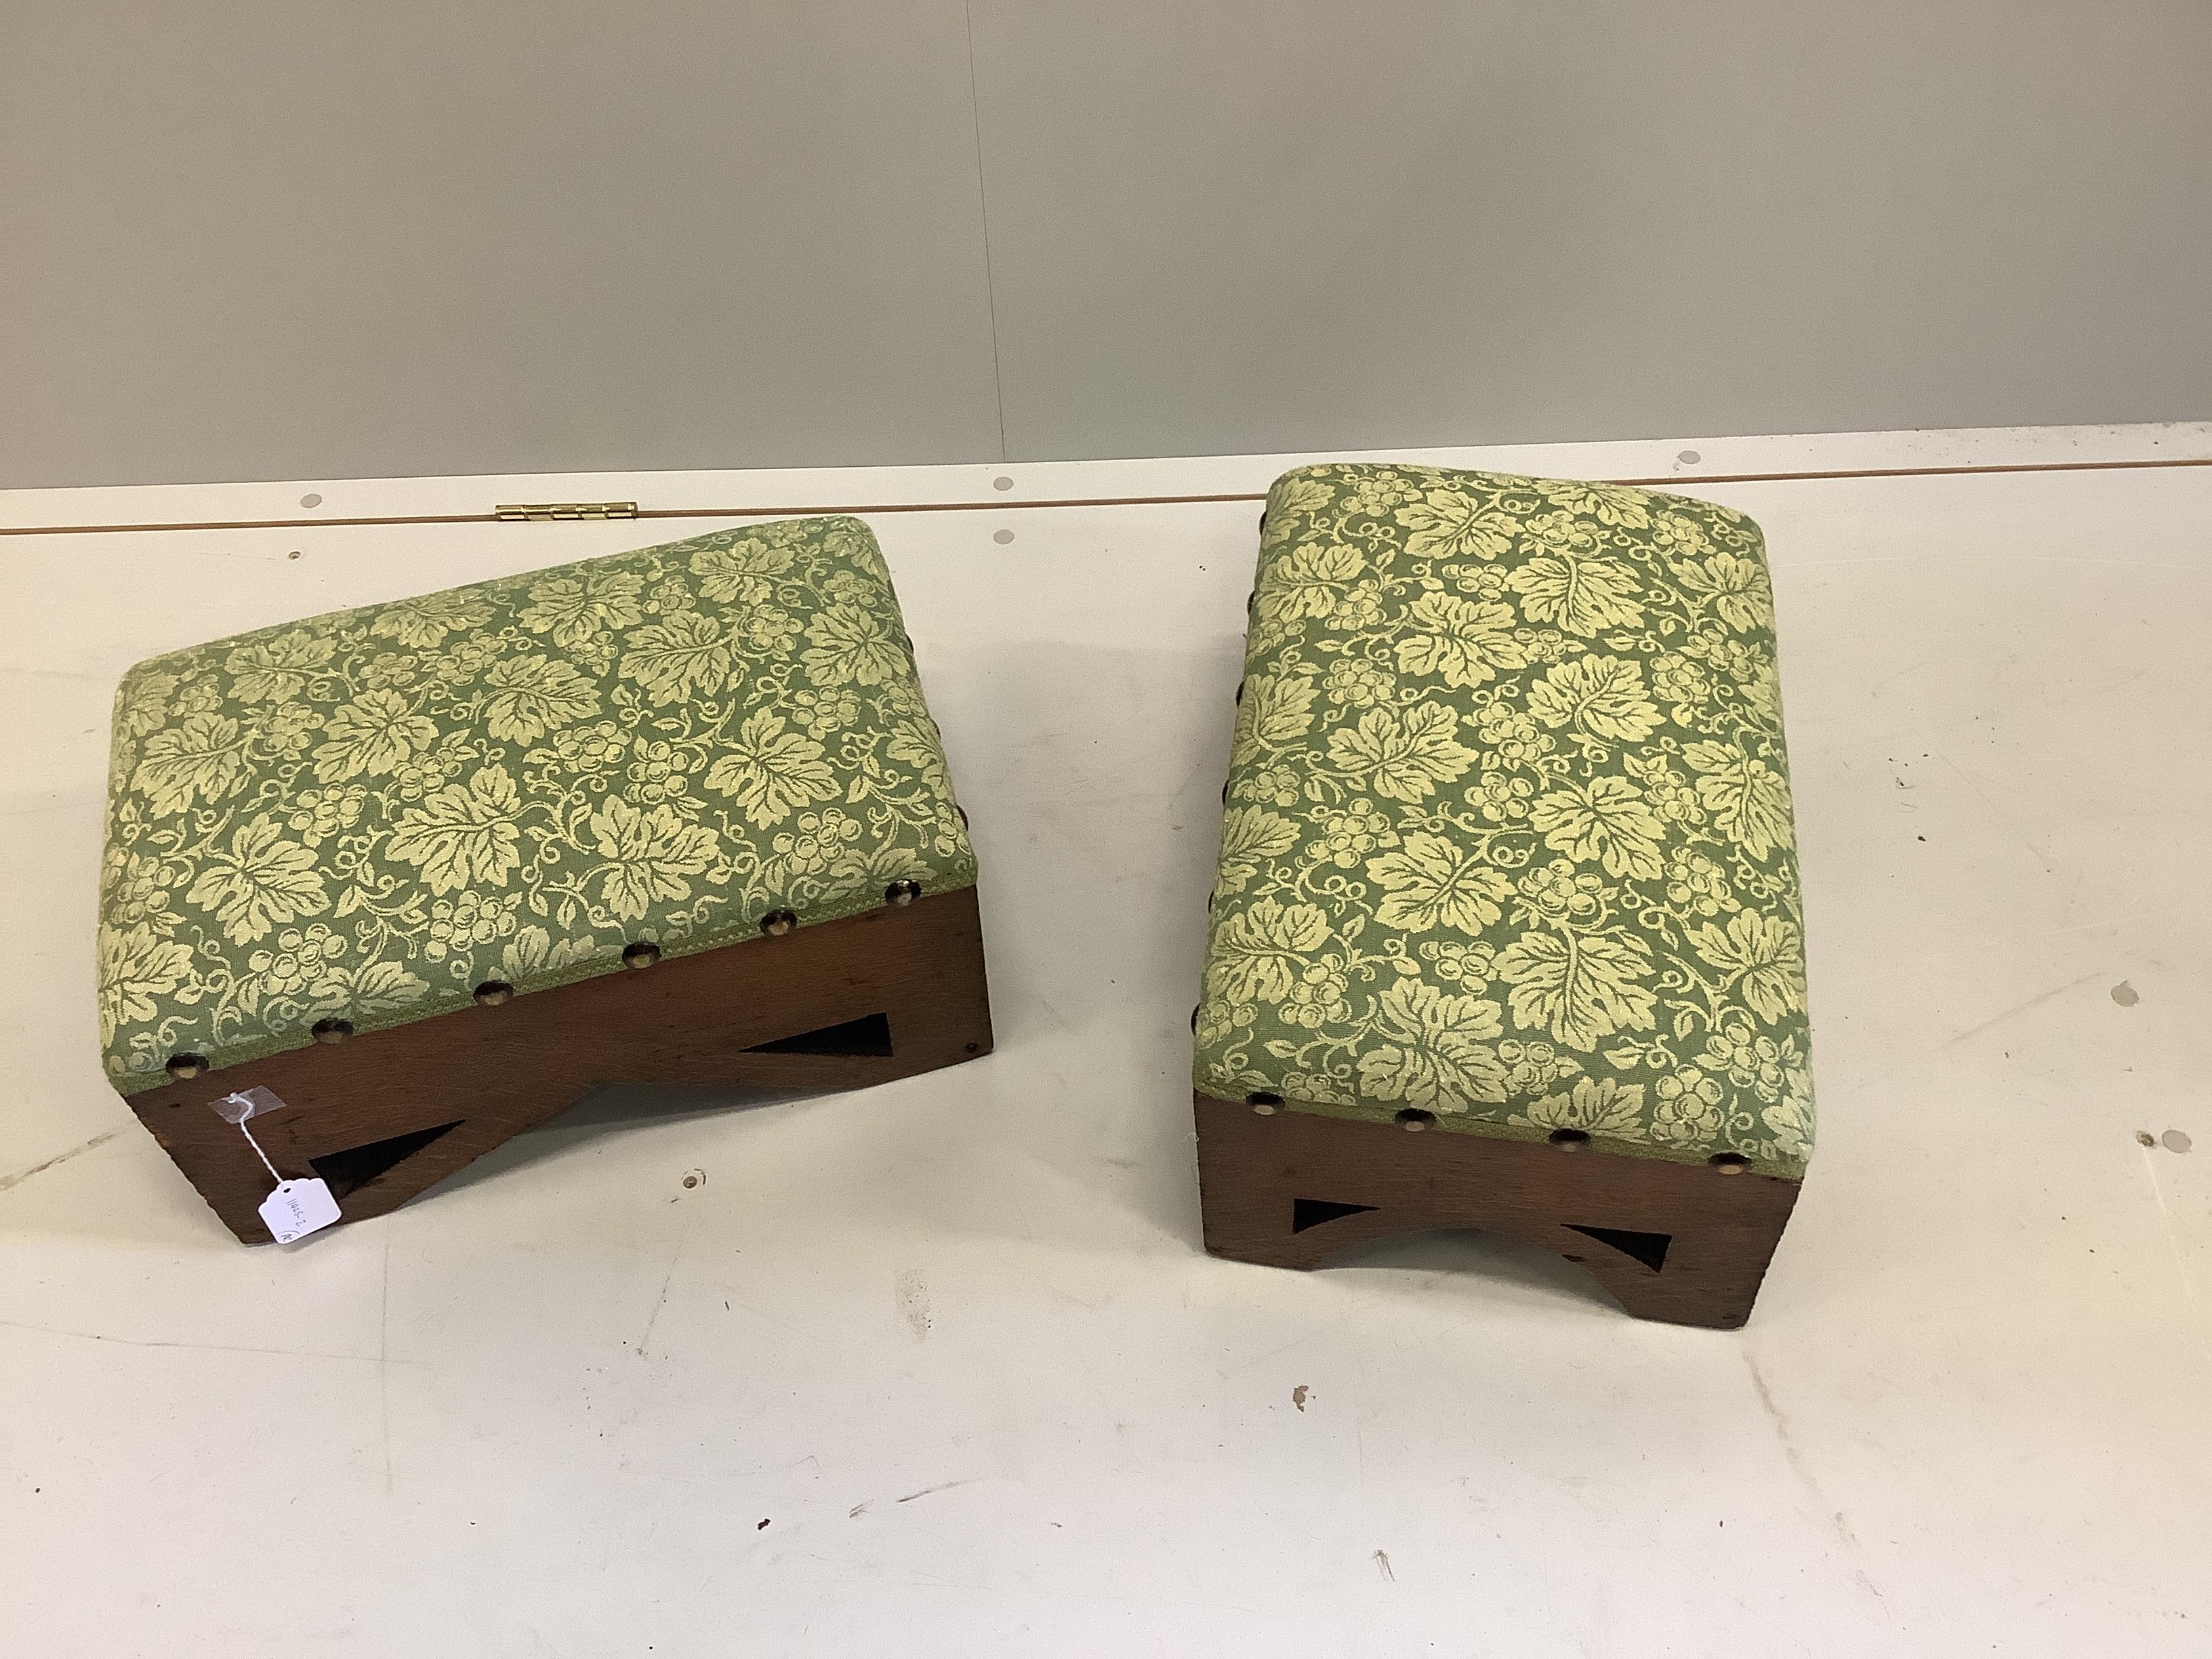 A pair of rectangular Gothic style oak footstools, width 46cm, depth 30cm, height 23cm